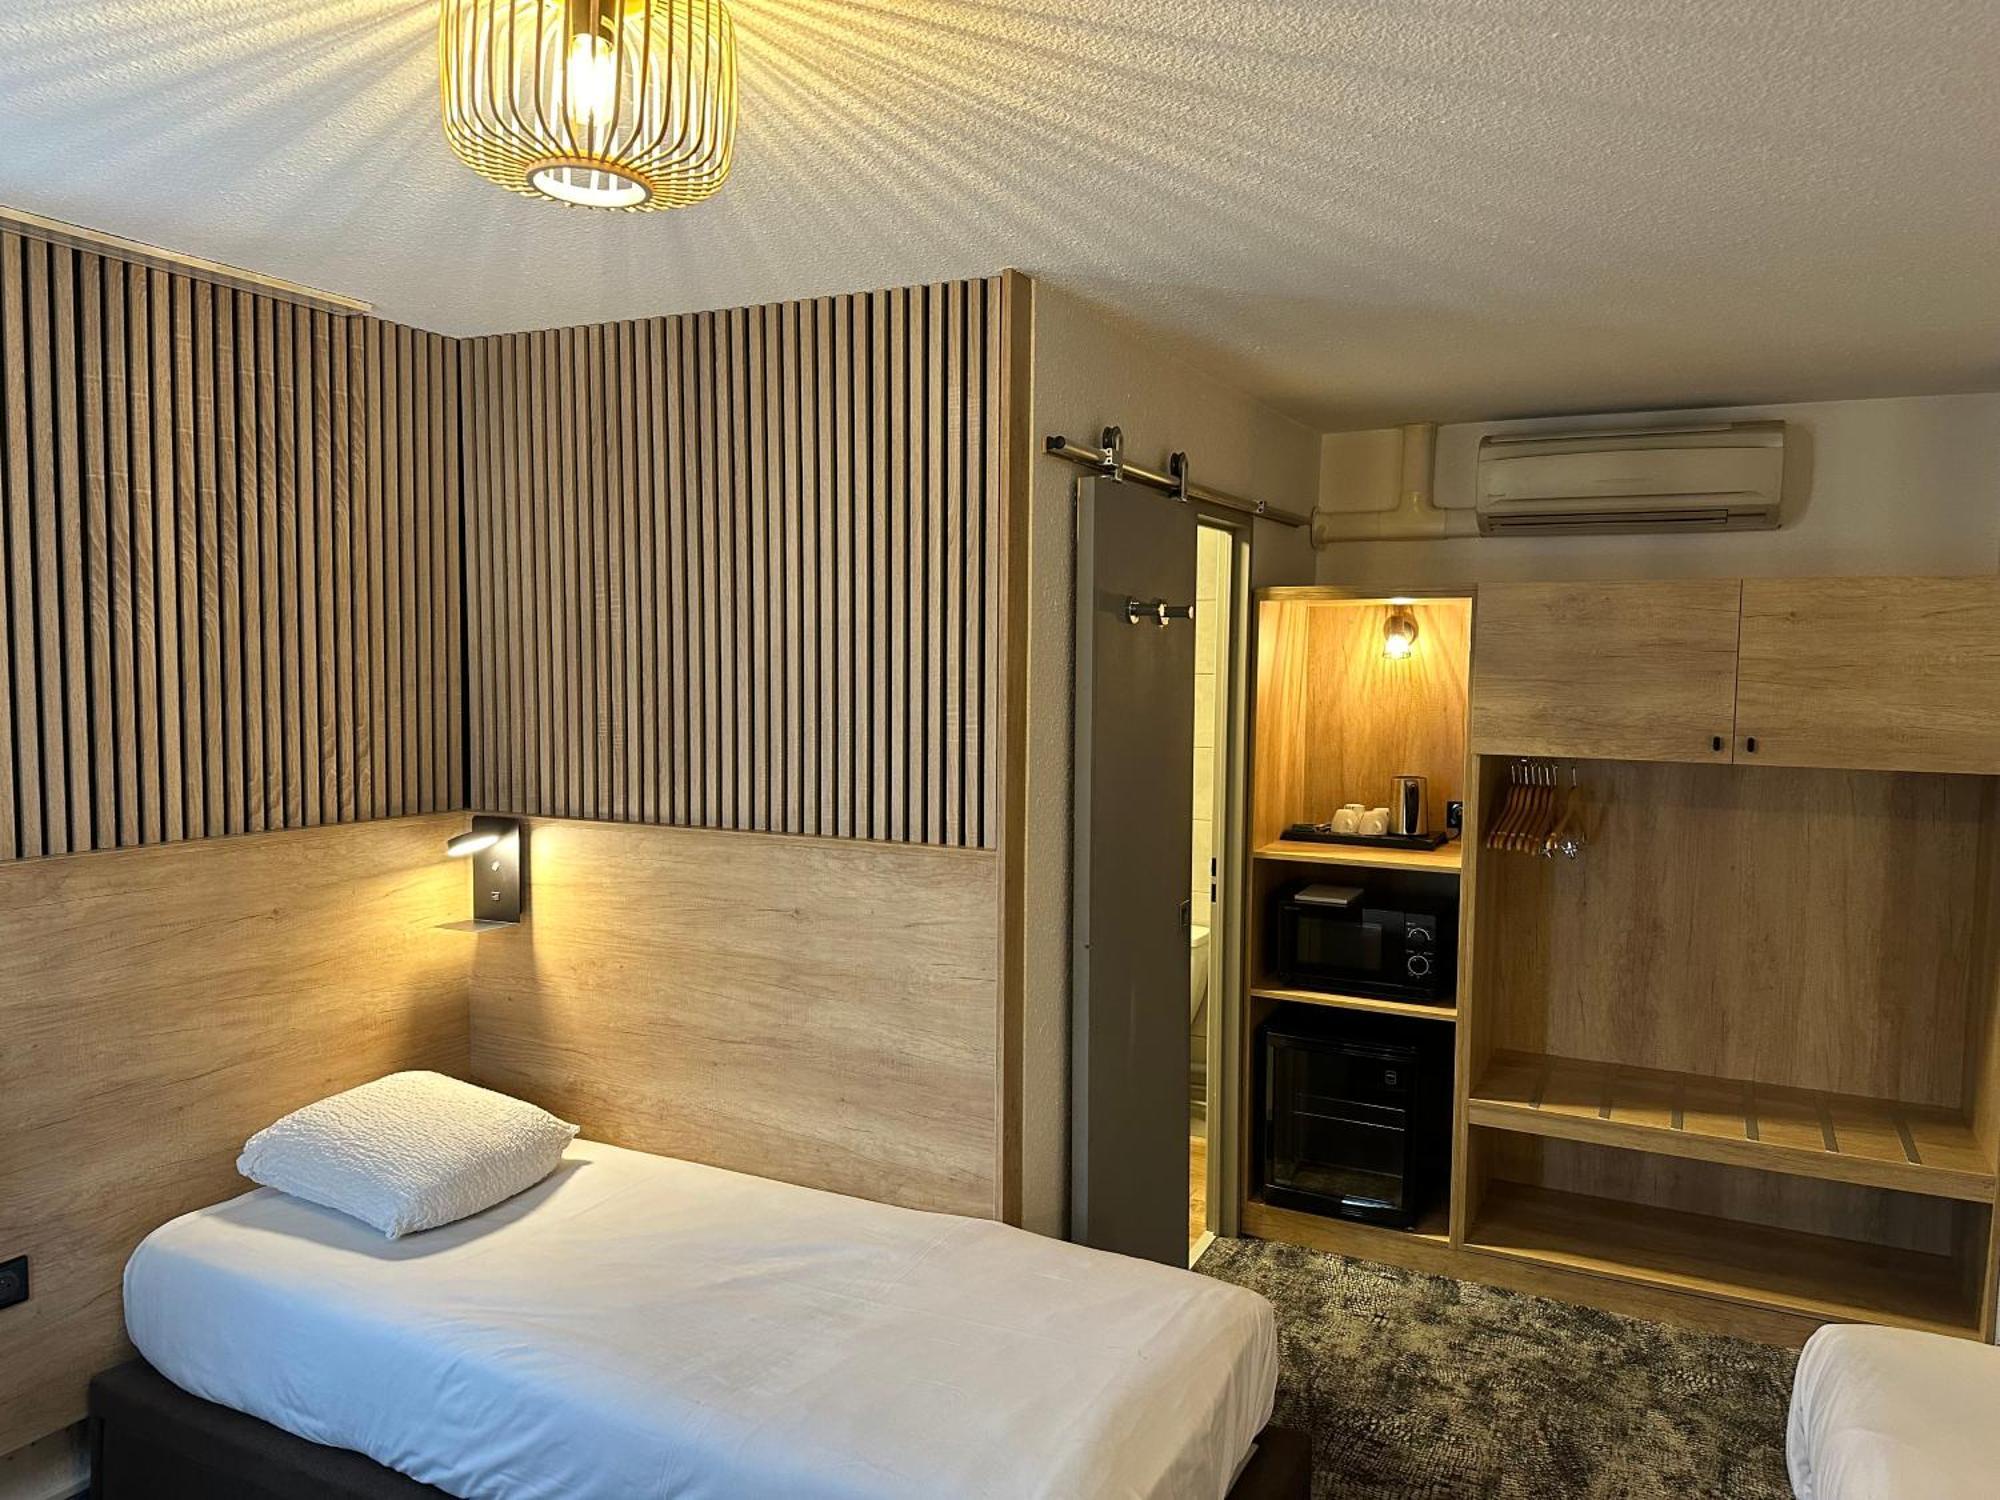 Ostal Pau Universite - Sure Hotel Collection By Best Western Buitenkant foto